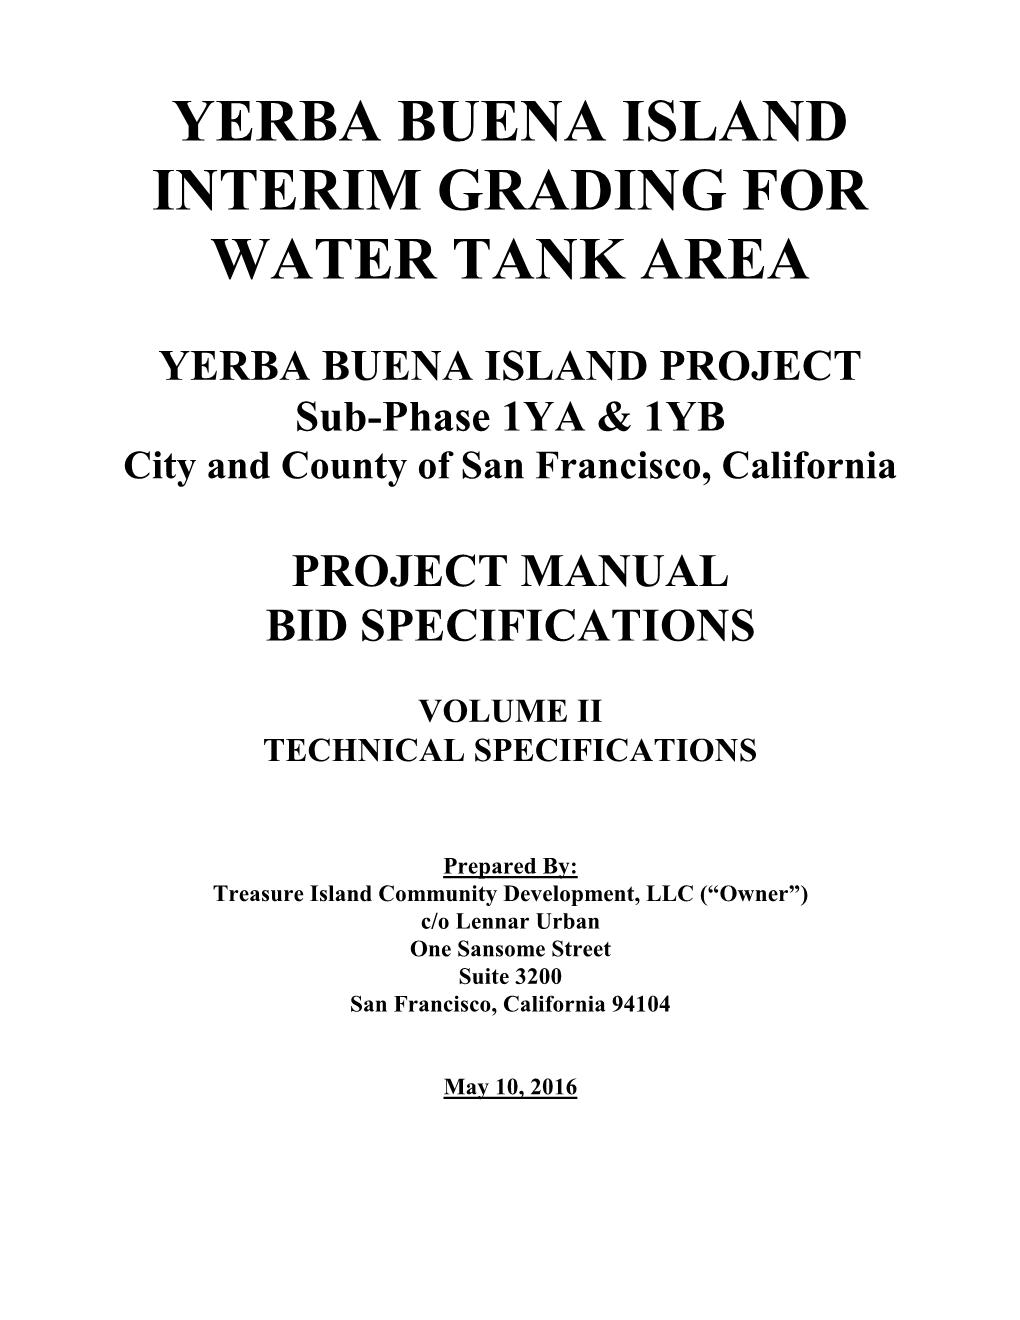 Yerba Buena Island Interim Grading for Water Tank Area